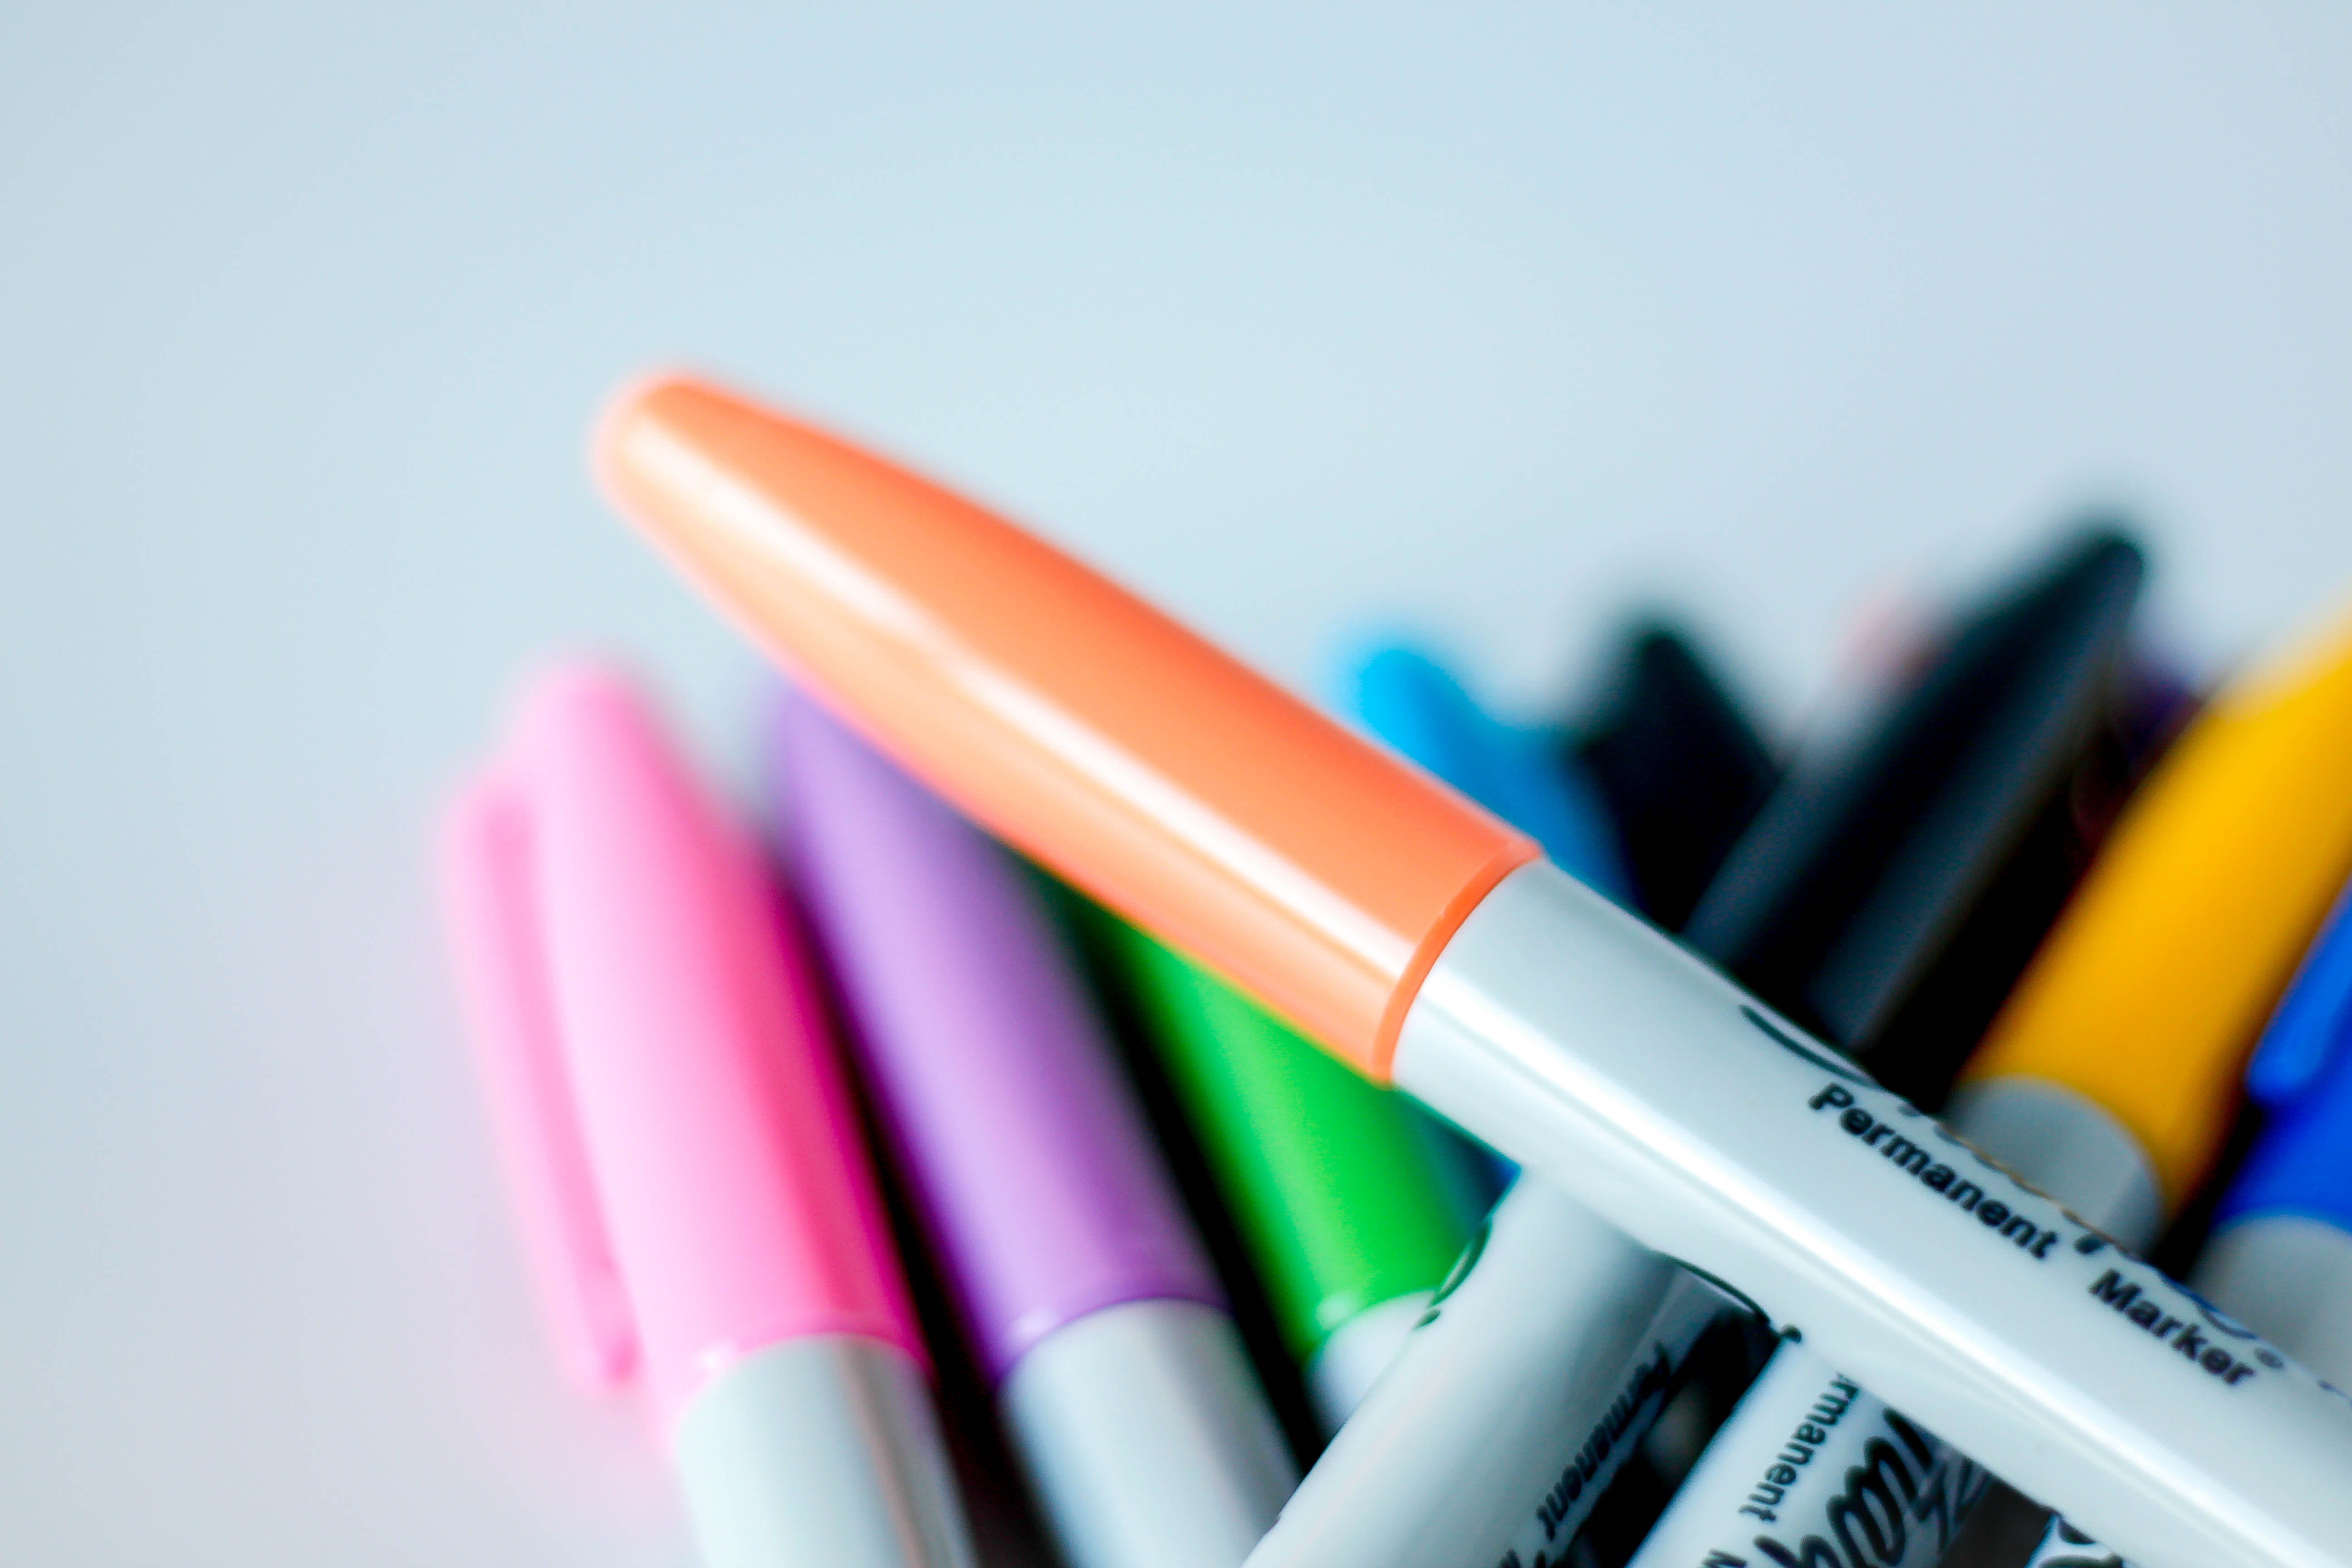 Filling pen. Карандаши лекарственная форма. 3 Цветных ручки. Color point карандаш.